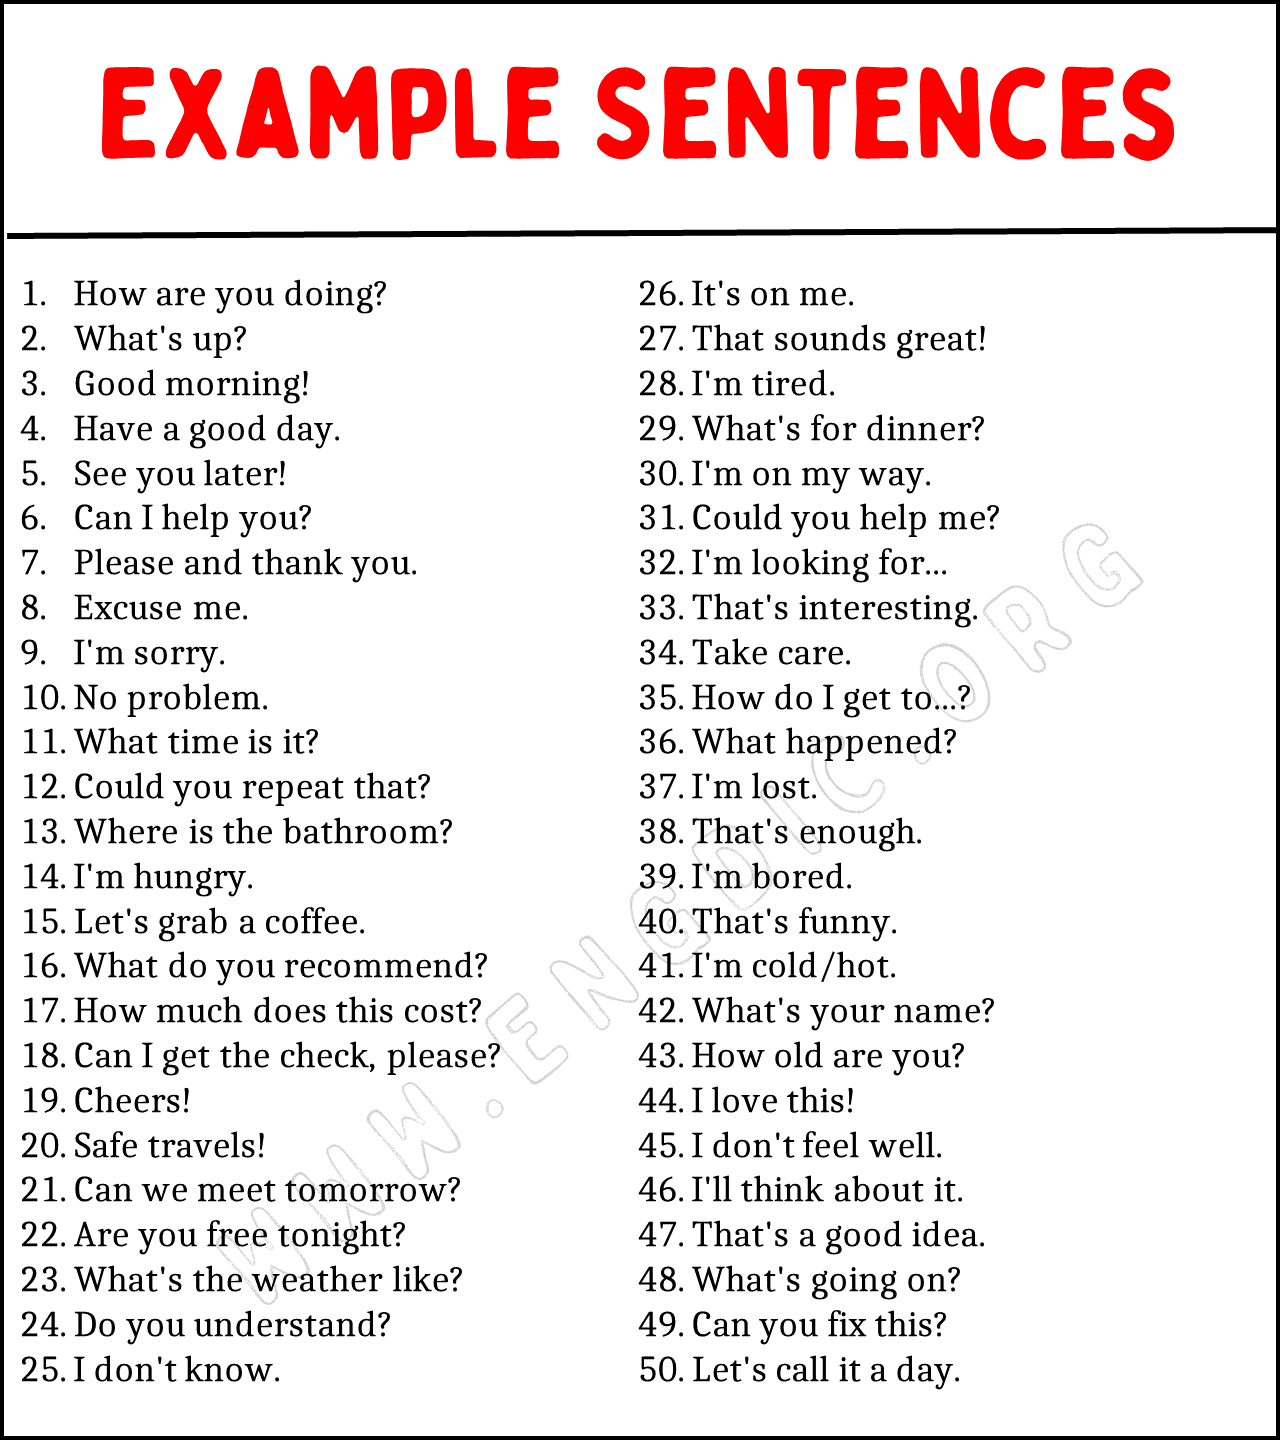 Example Sentences